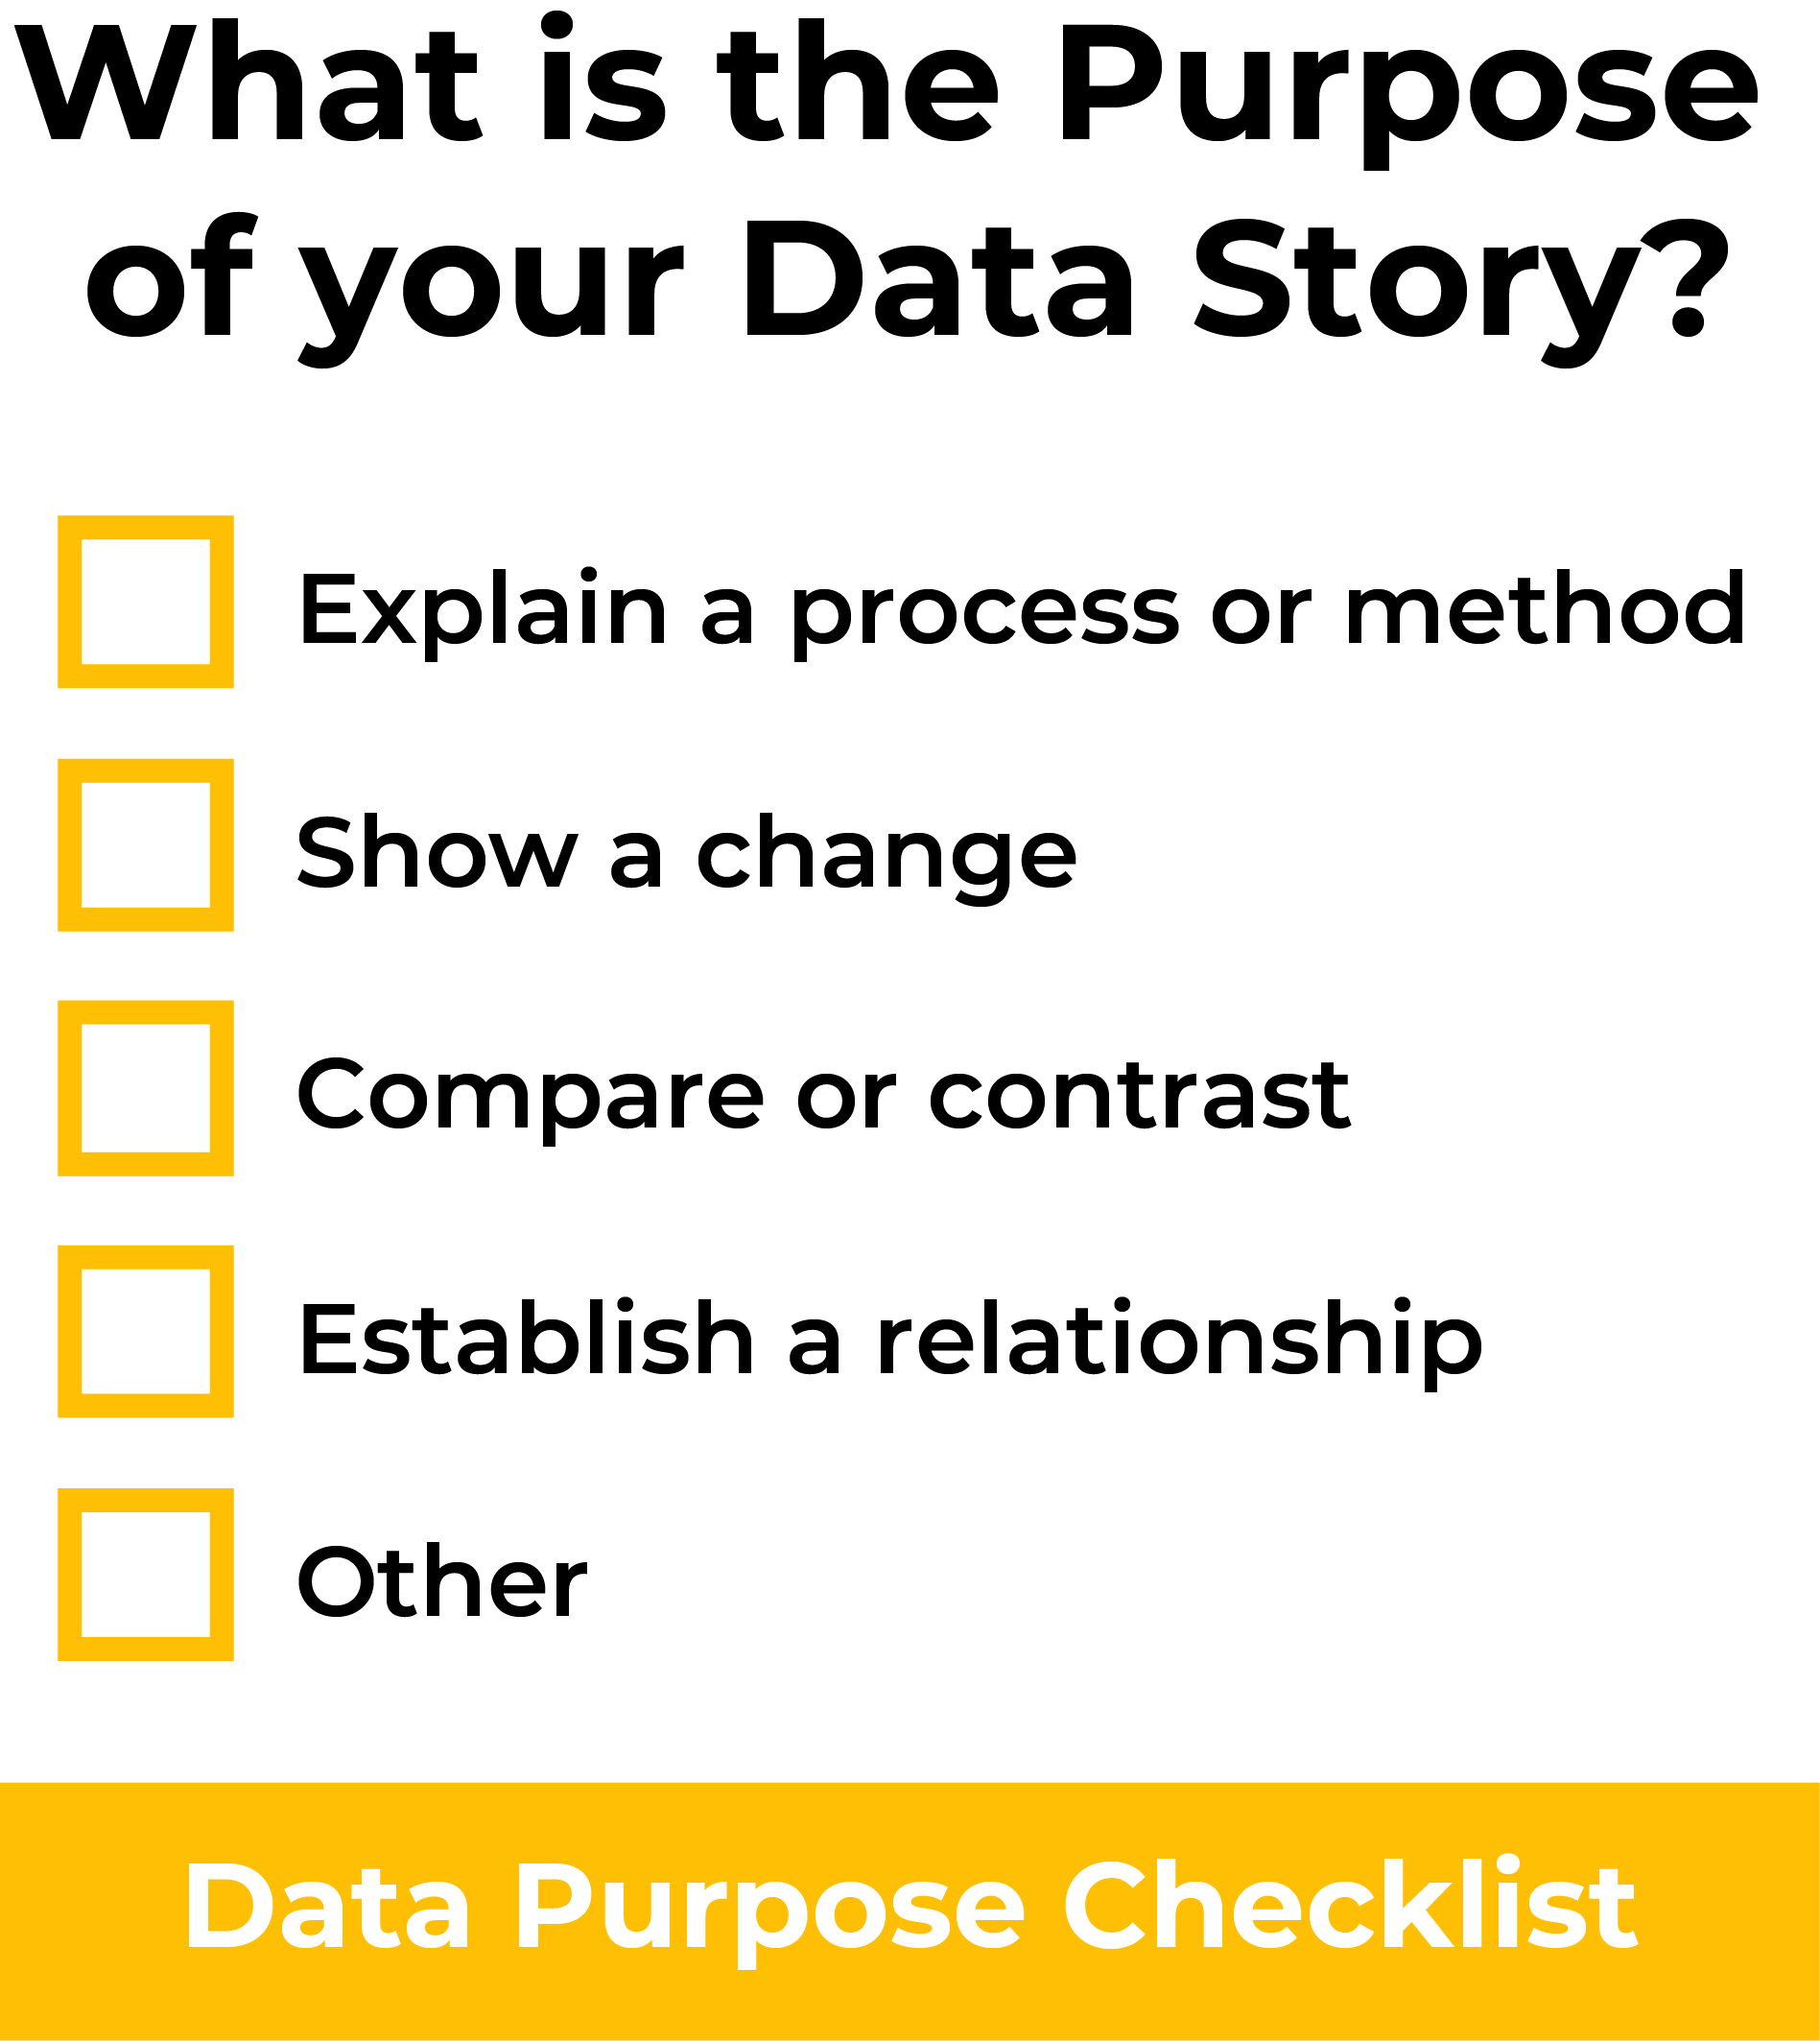 Data visualization checklist tool